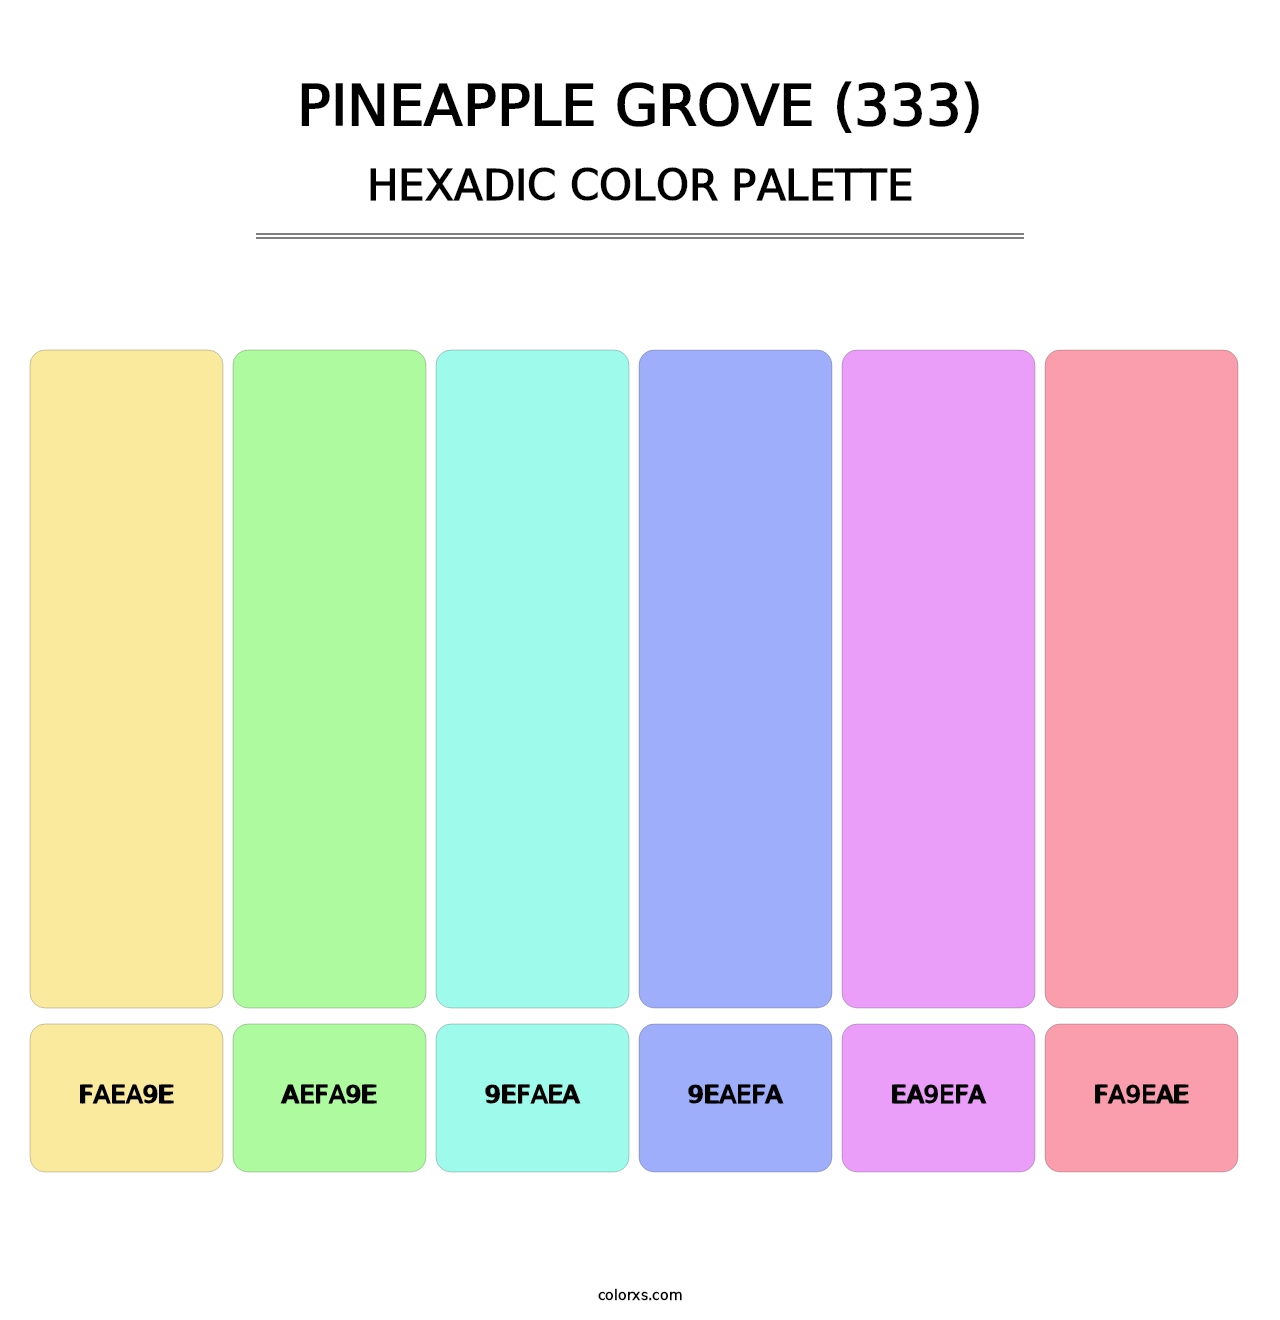 Pineapple Grove (333) - Hexadic Color Palette